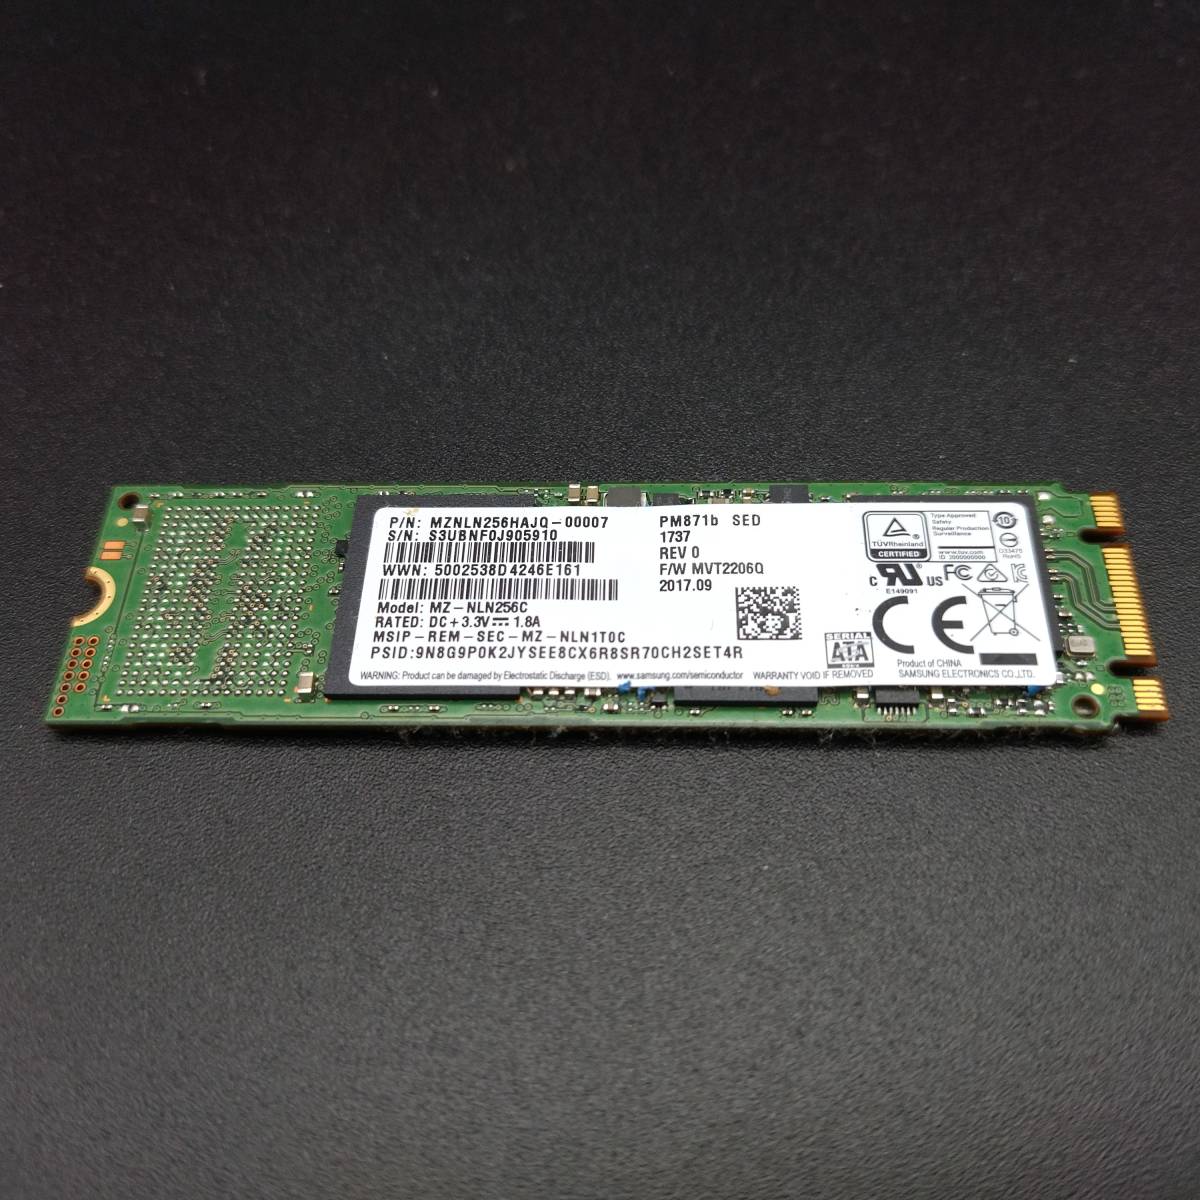 SAMSUNG SSD 256GB M.2 タイプ2280 SATA 内蔵型 (動作確認済み)